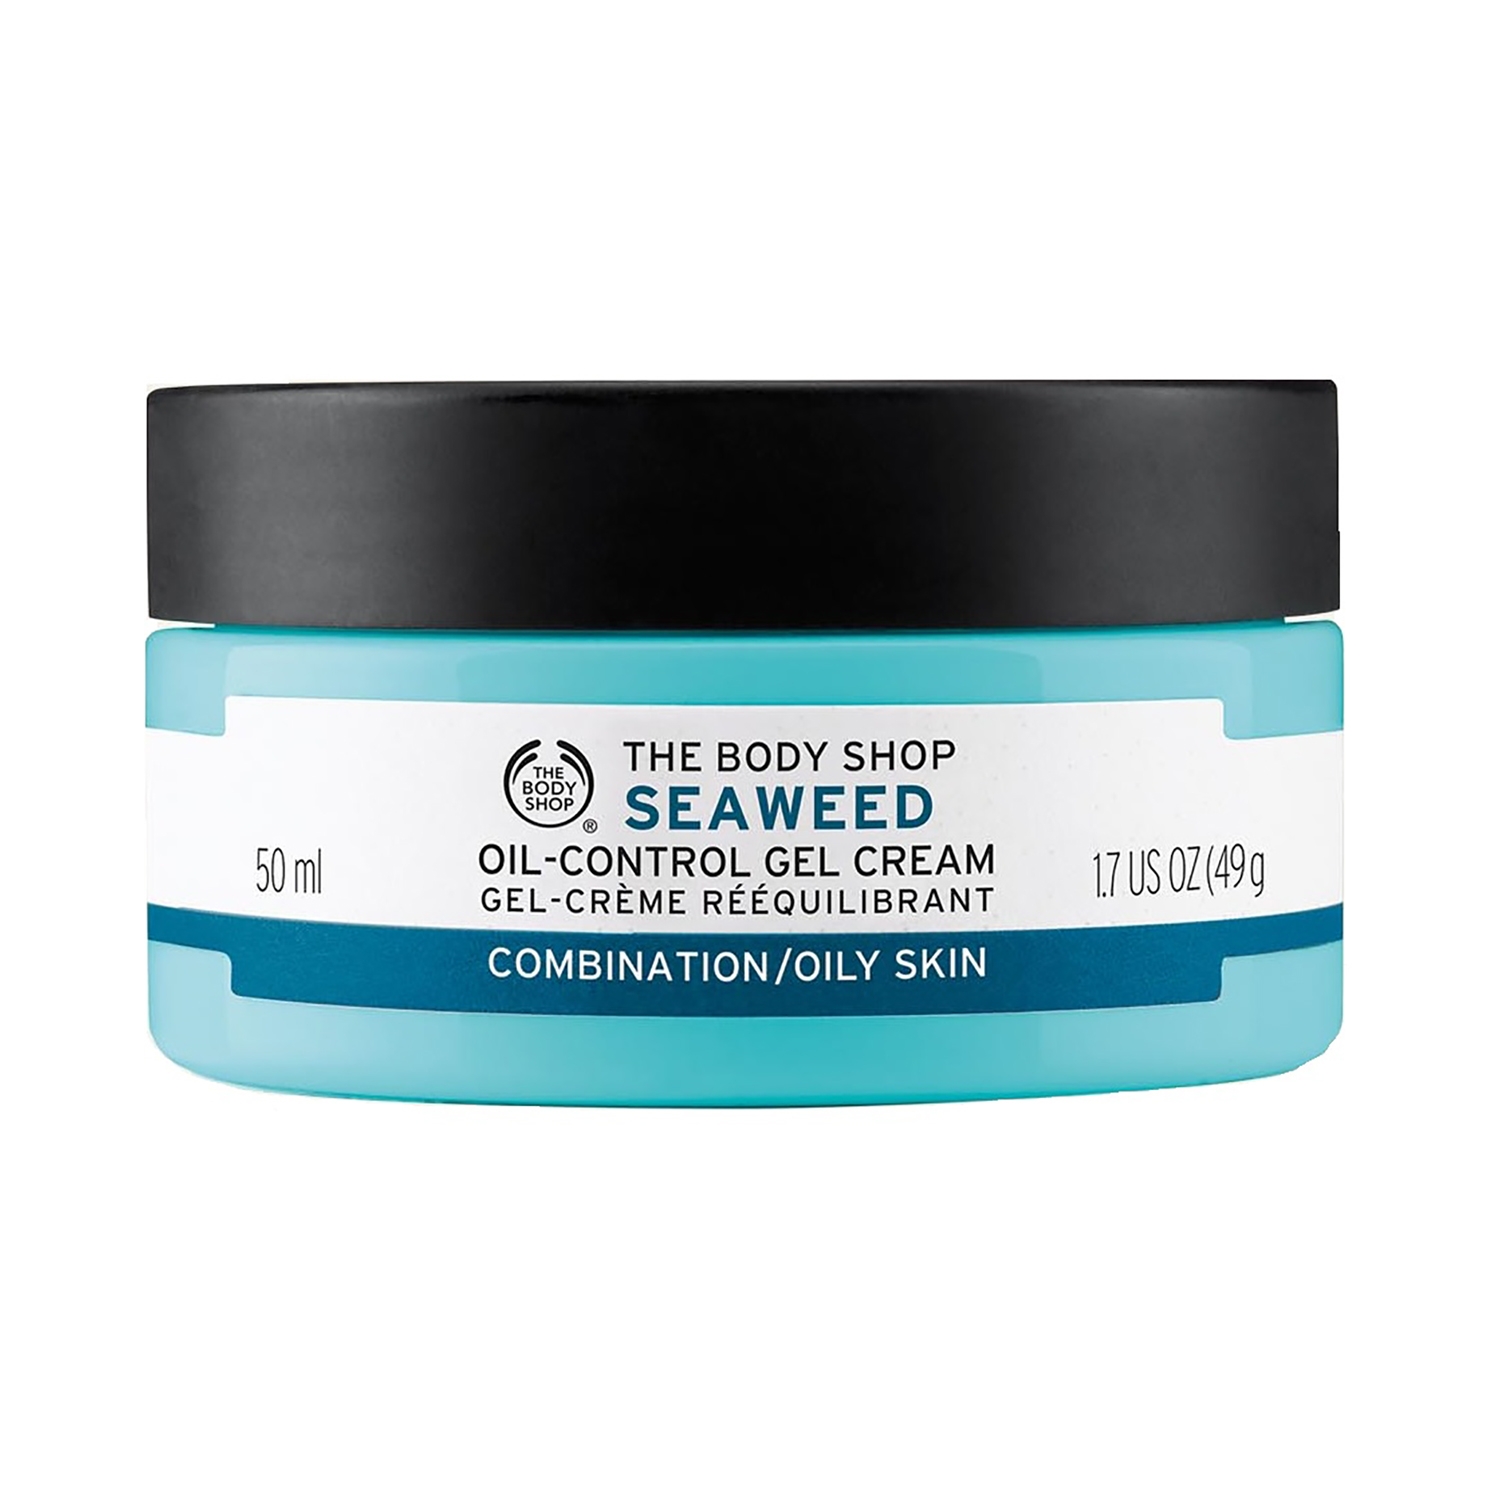 The Body Shop Seaweed Oil-Control Gel Cream (50ml)